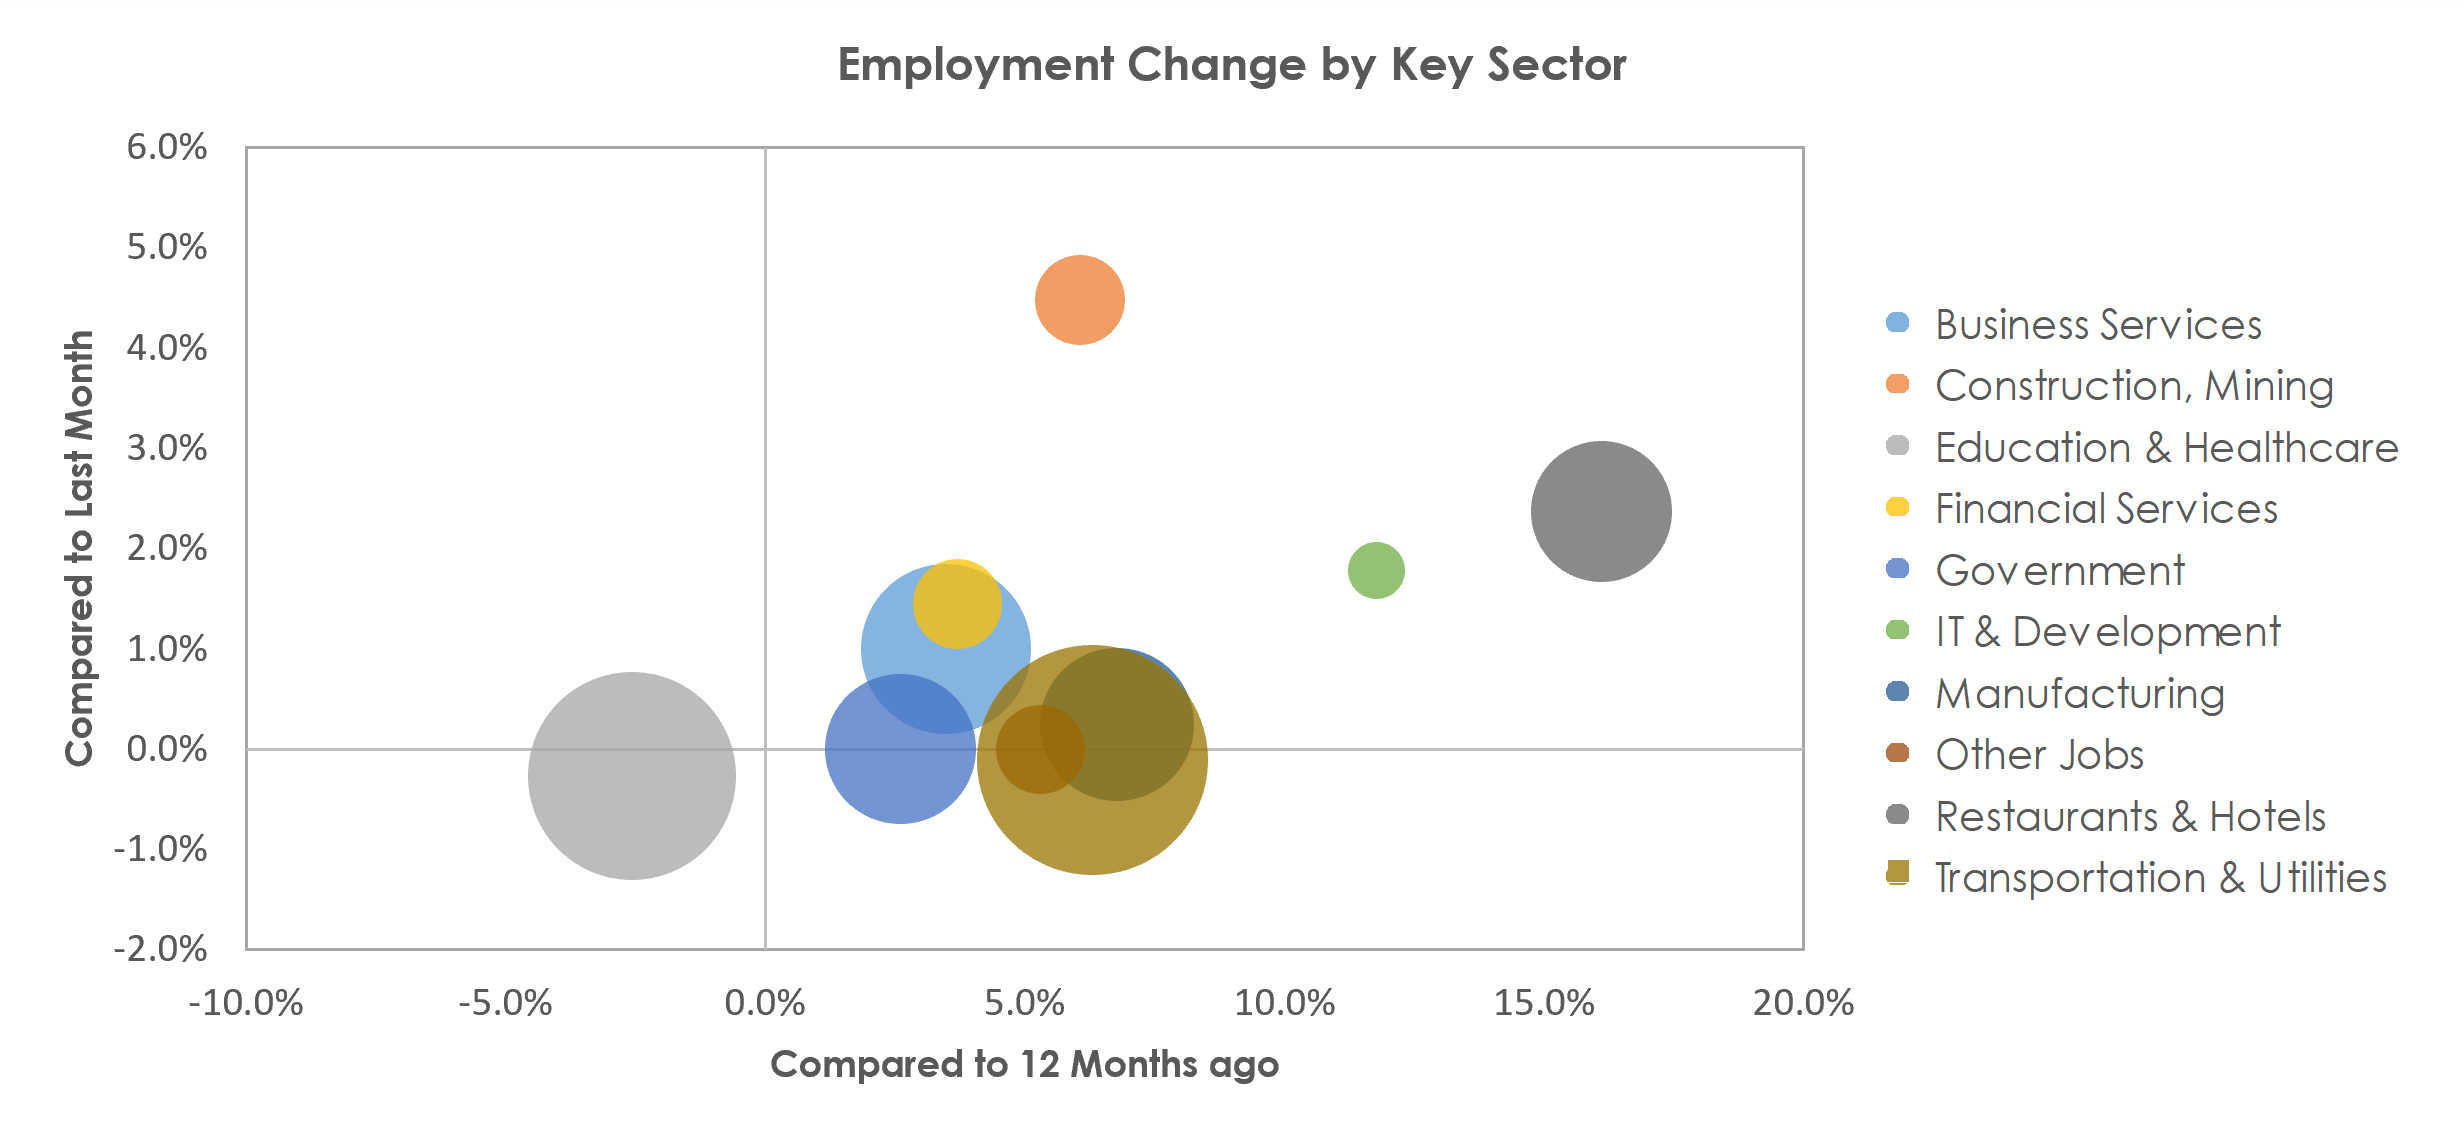 Allentown-Bethlehem-Easton, PA-NJ Unemployment by Industry April 2022